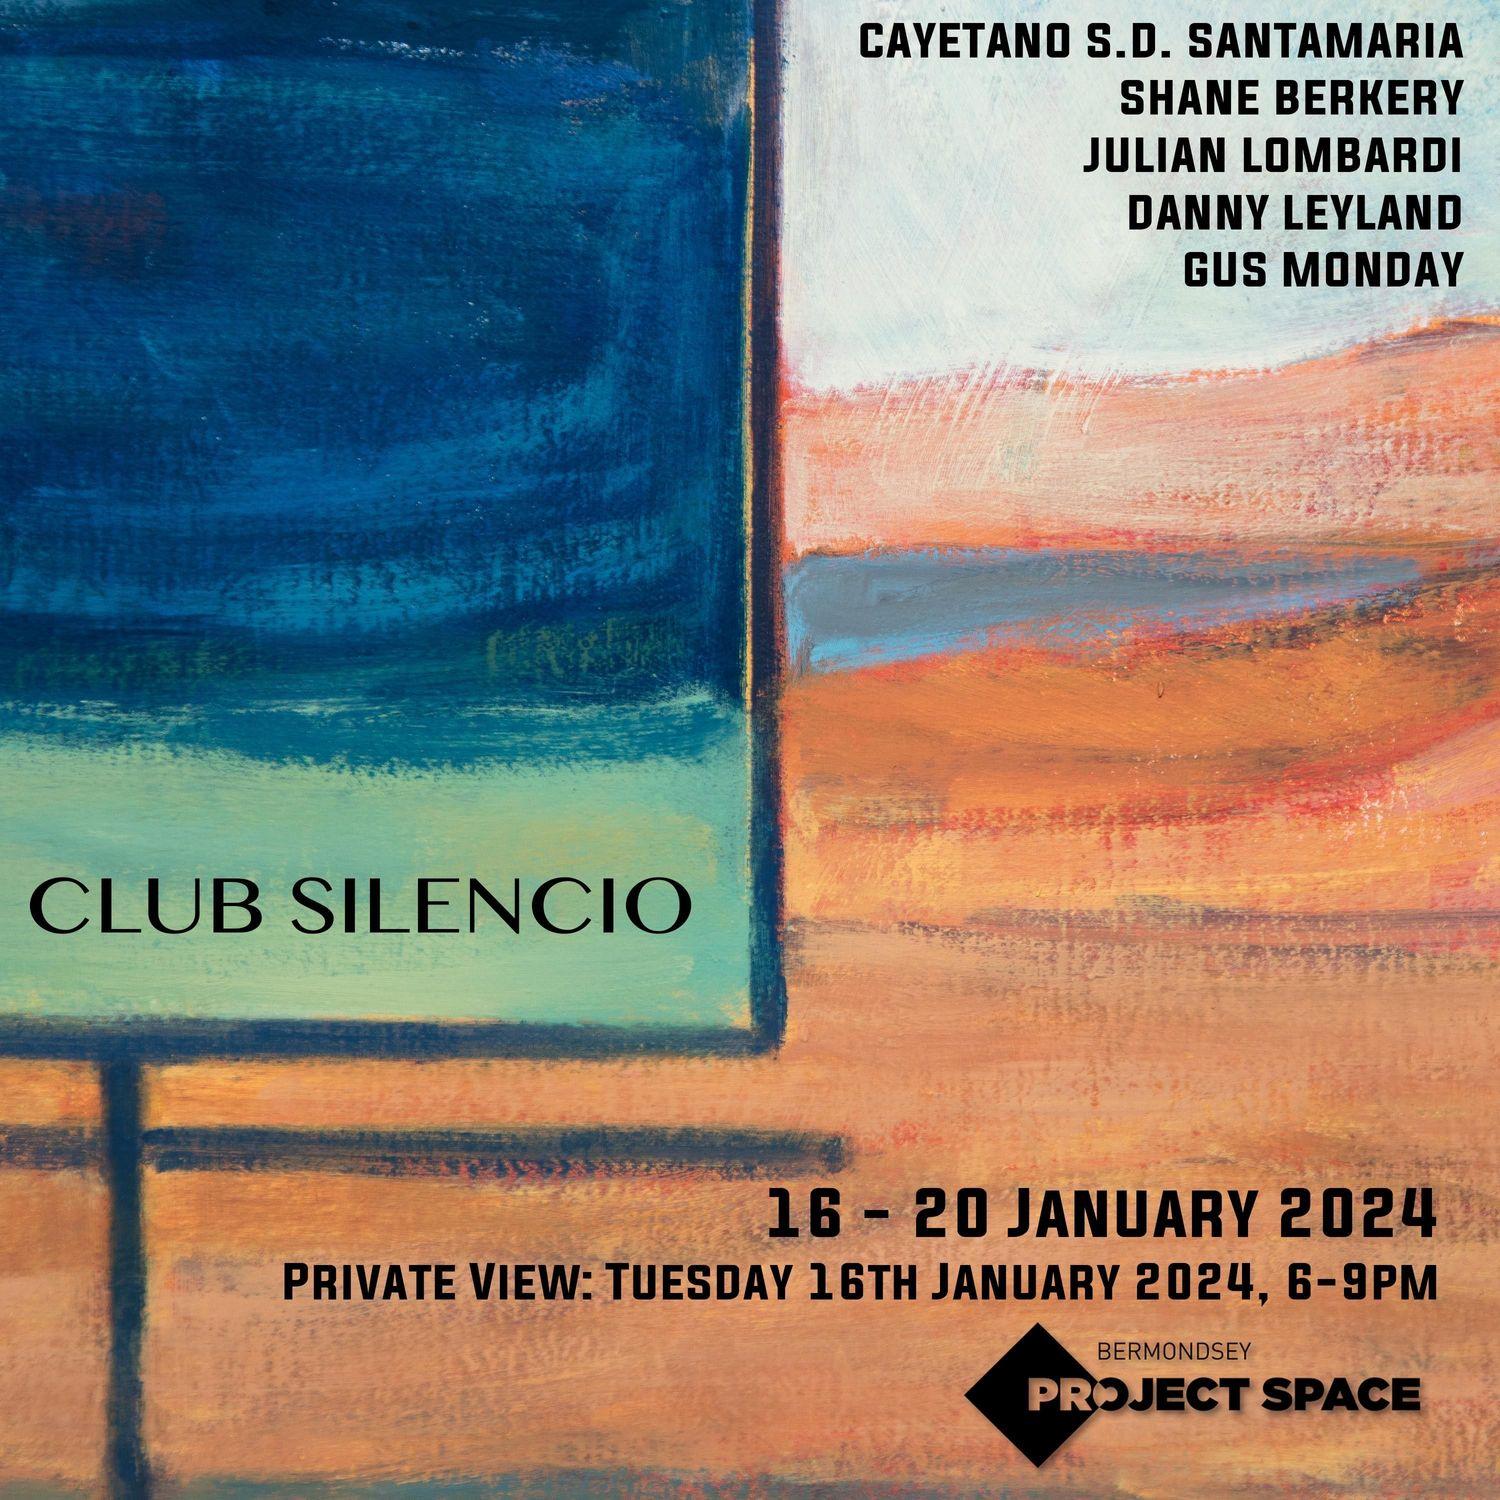 Club Silencio  | Danny Leyland, Julian Lombardi, Shane Berkery, Gus Monday, Cayetano Sanz de Santamaria | Bermondsey Project Space